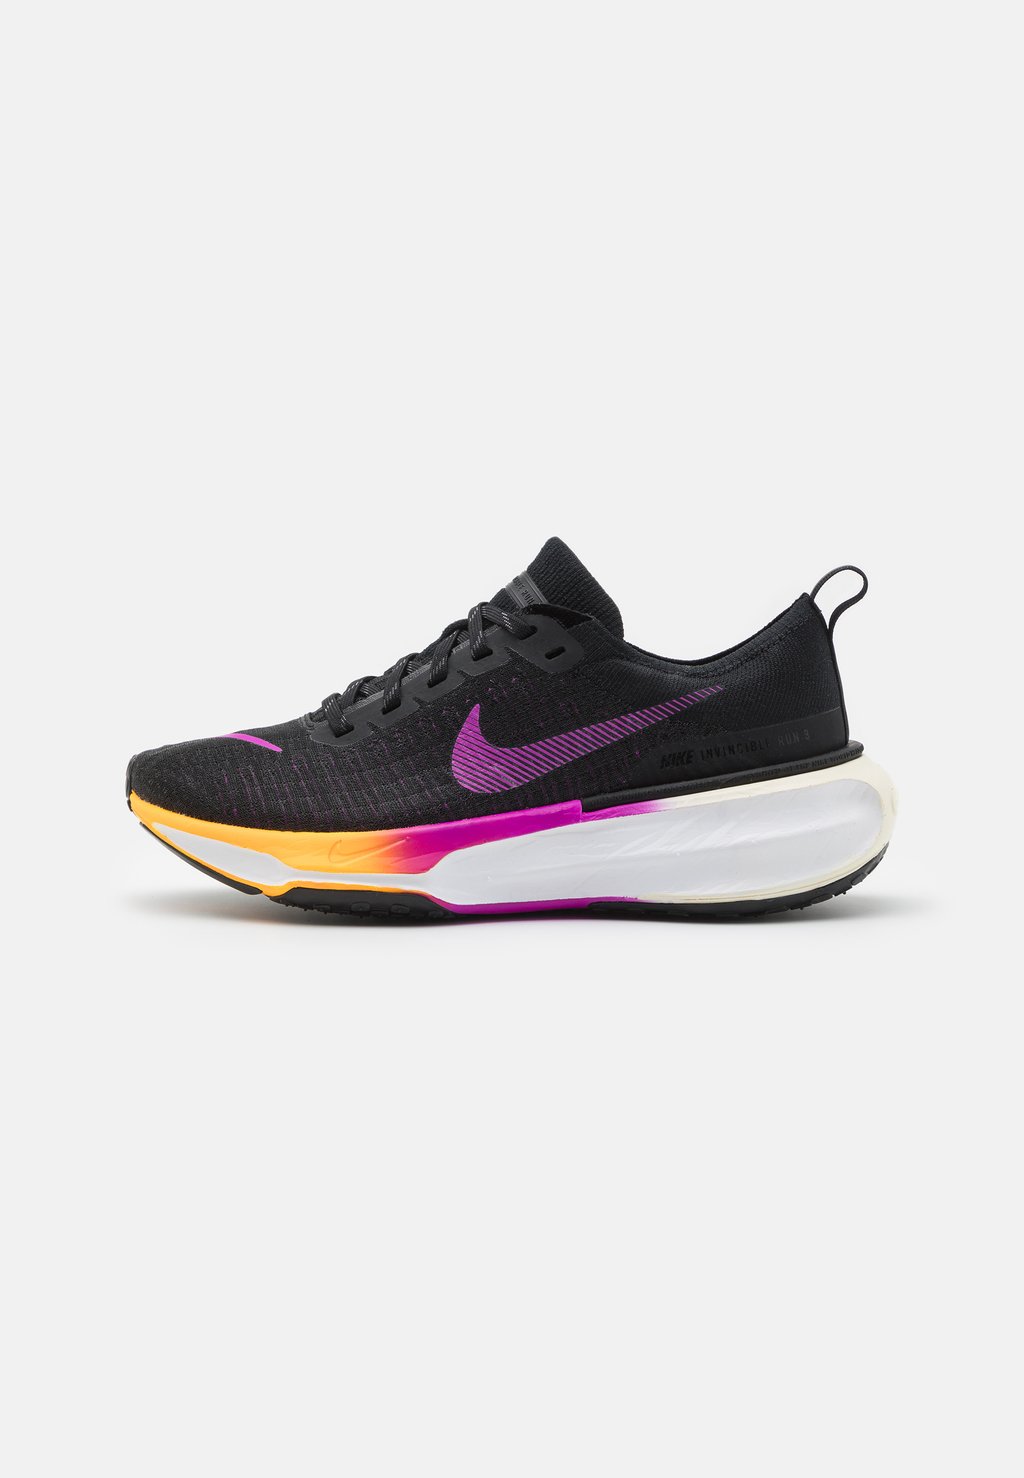 Нейтральные кроссовки ZOOMX INVINCIBLE RUN FK 3 Nike, цвет black/hyper violet/laser orange/coconut milk/anthracite/metallic black цена и фото